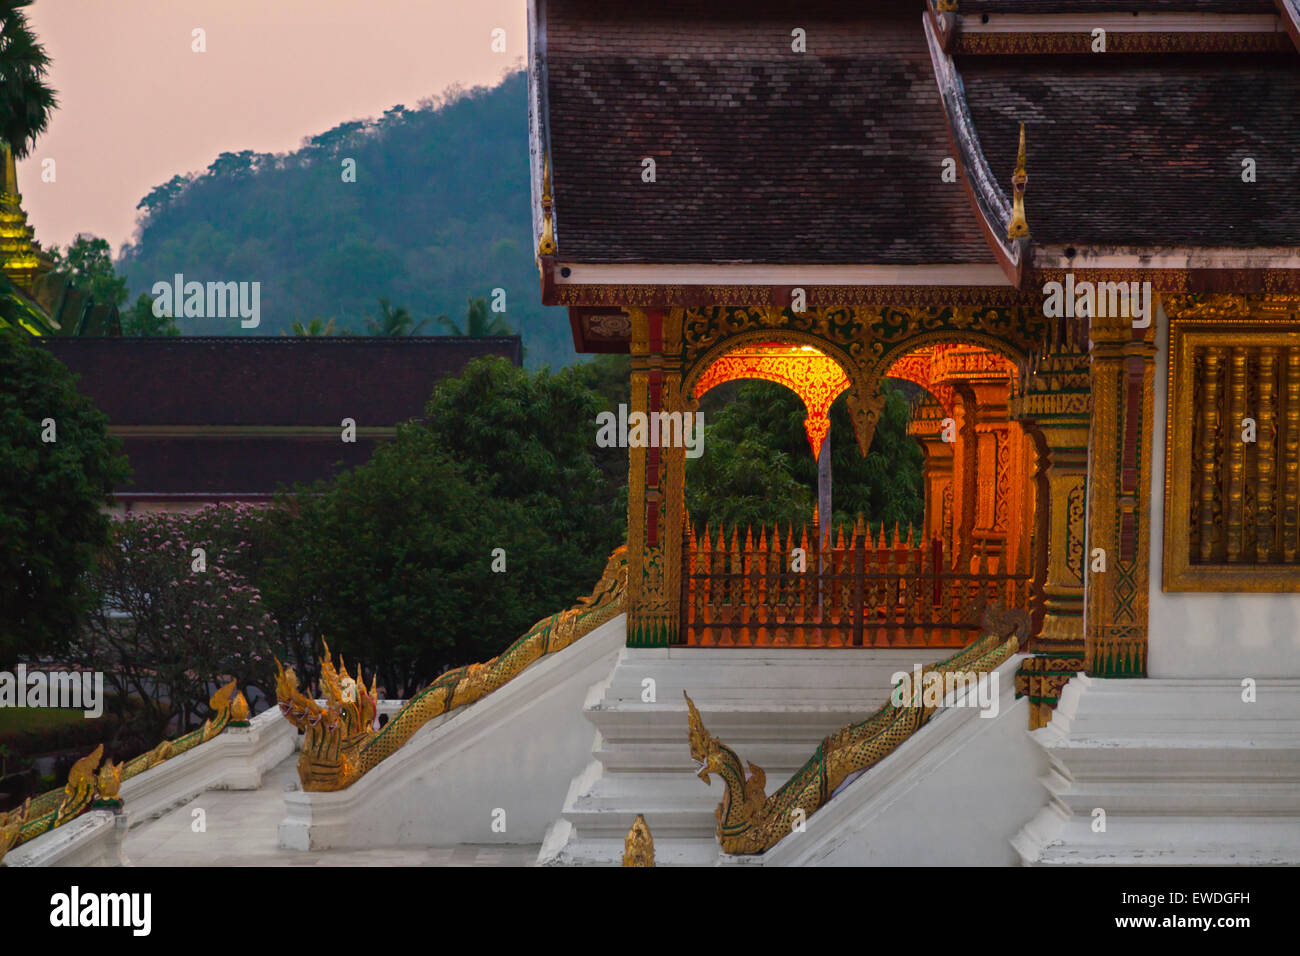 HAW PHA BANG o Tempio Reale è situato nel Palazzo Reale complesso - Luang Prabang, Laos Foto Stock